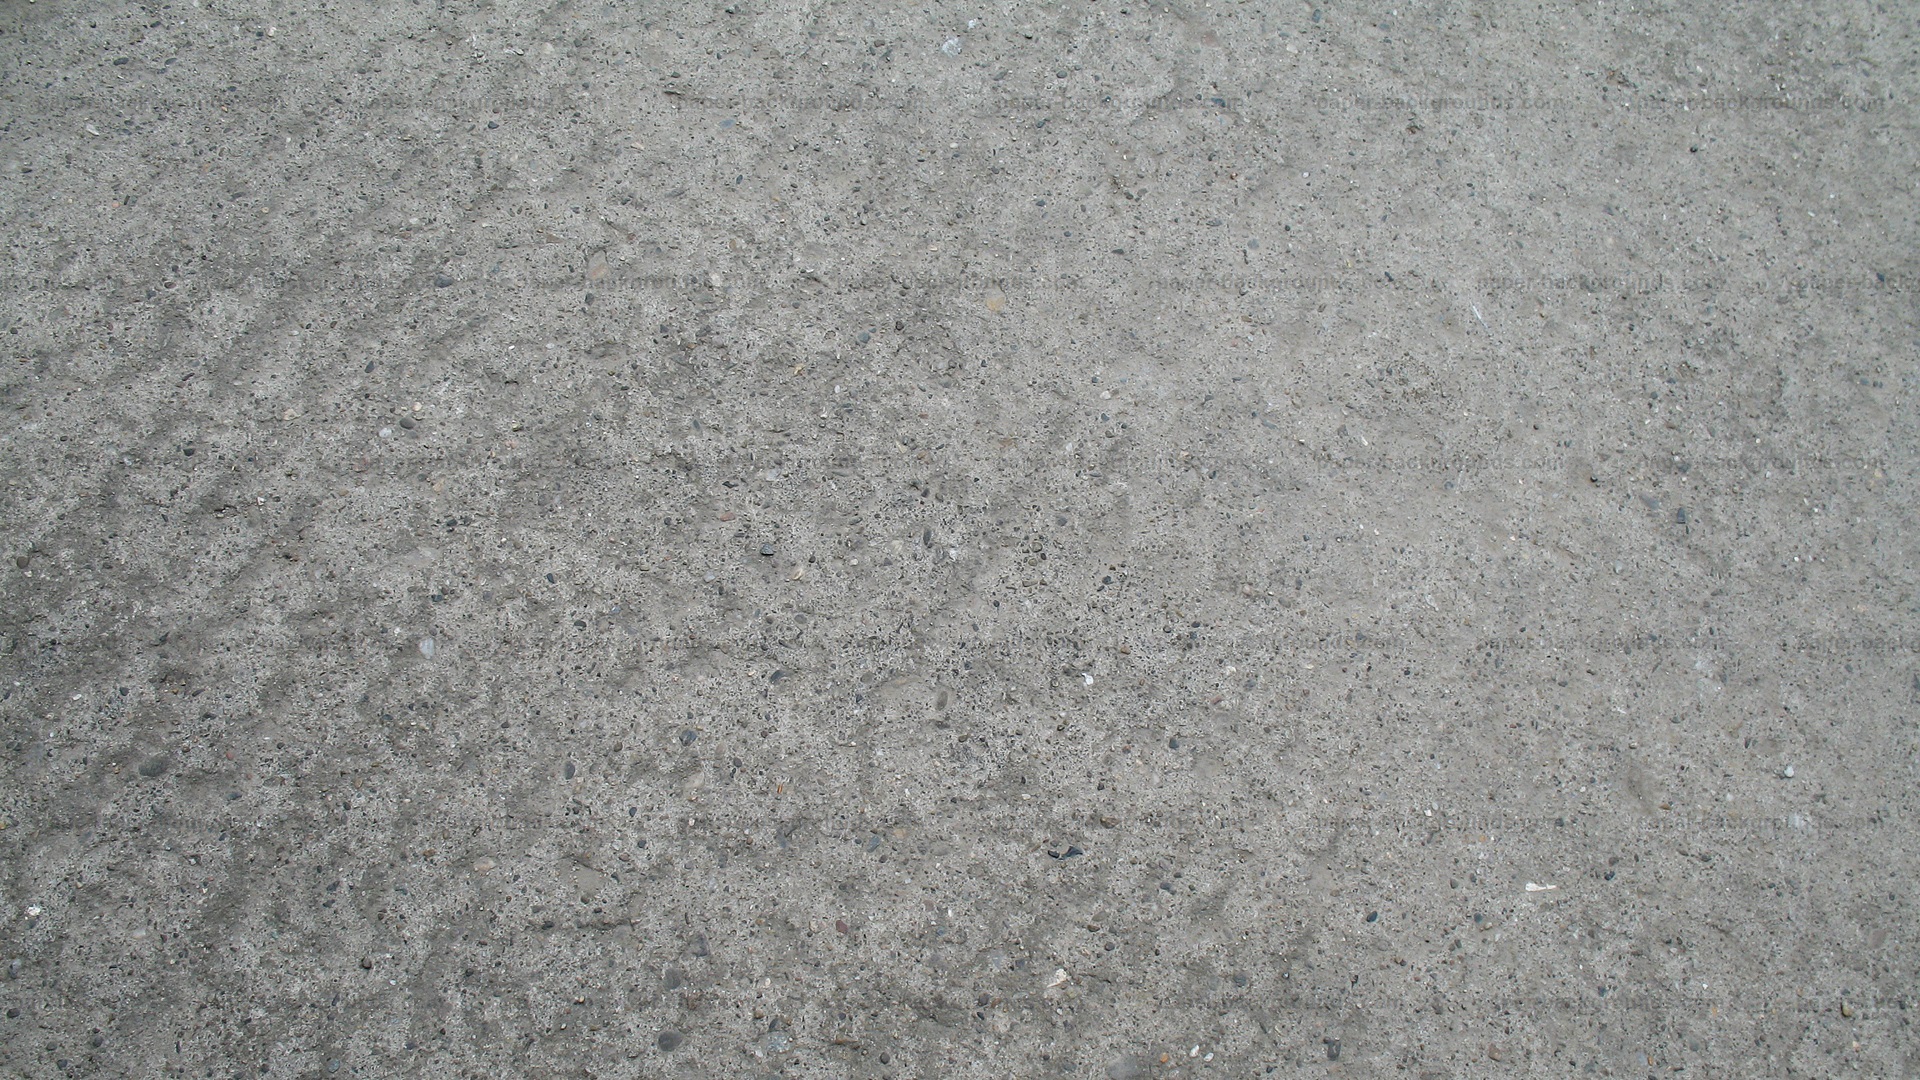 Texture Concrete TextureImage